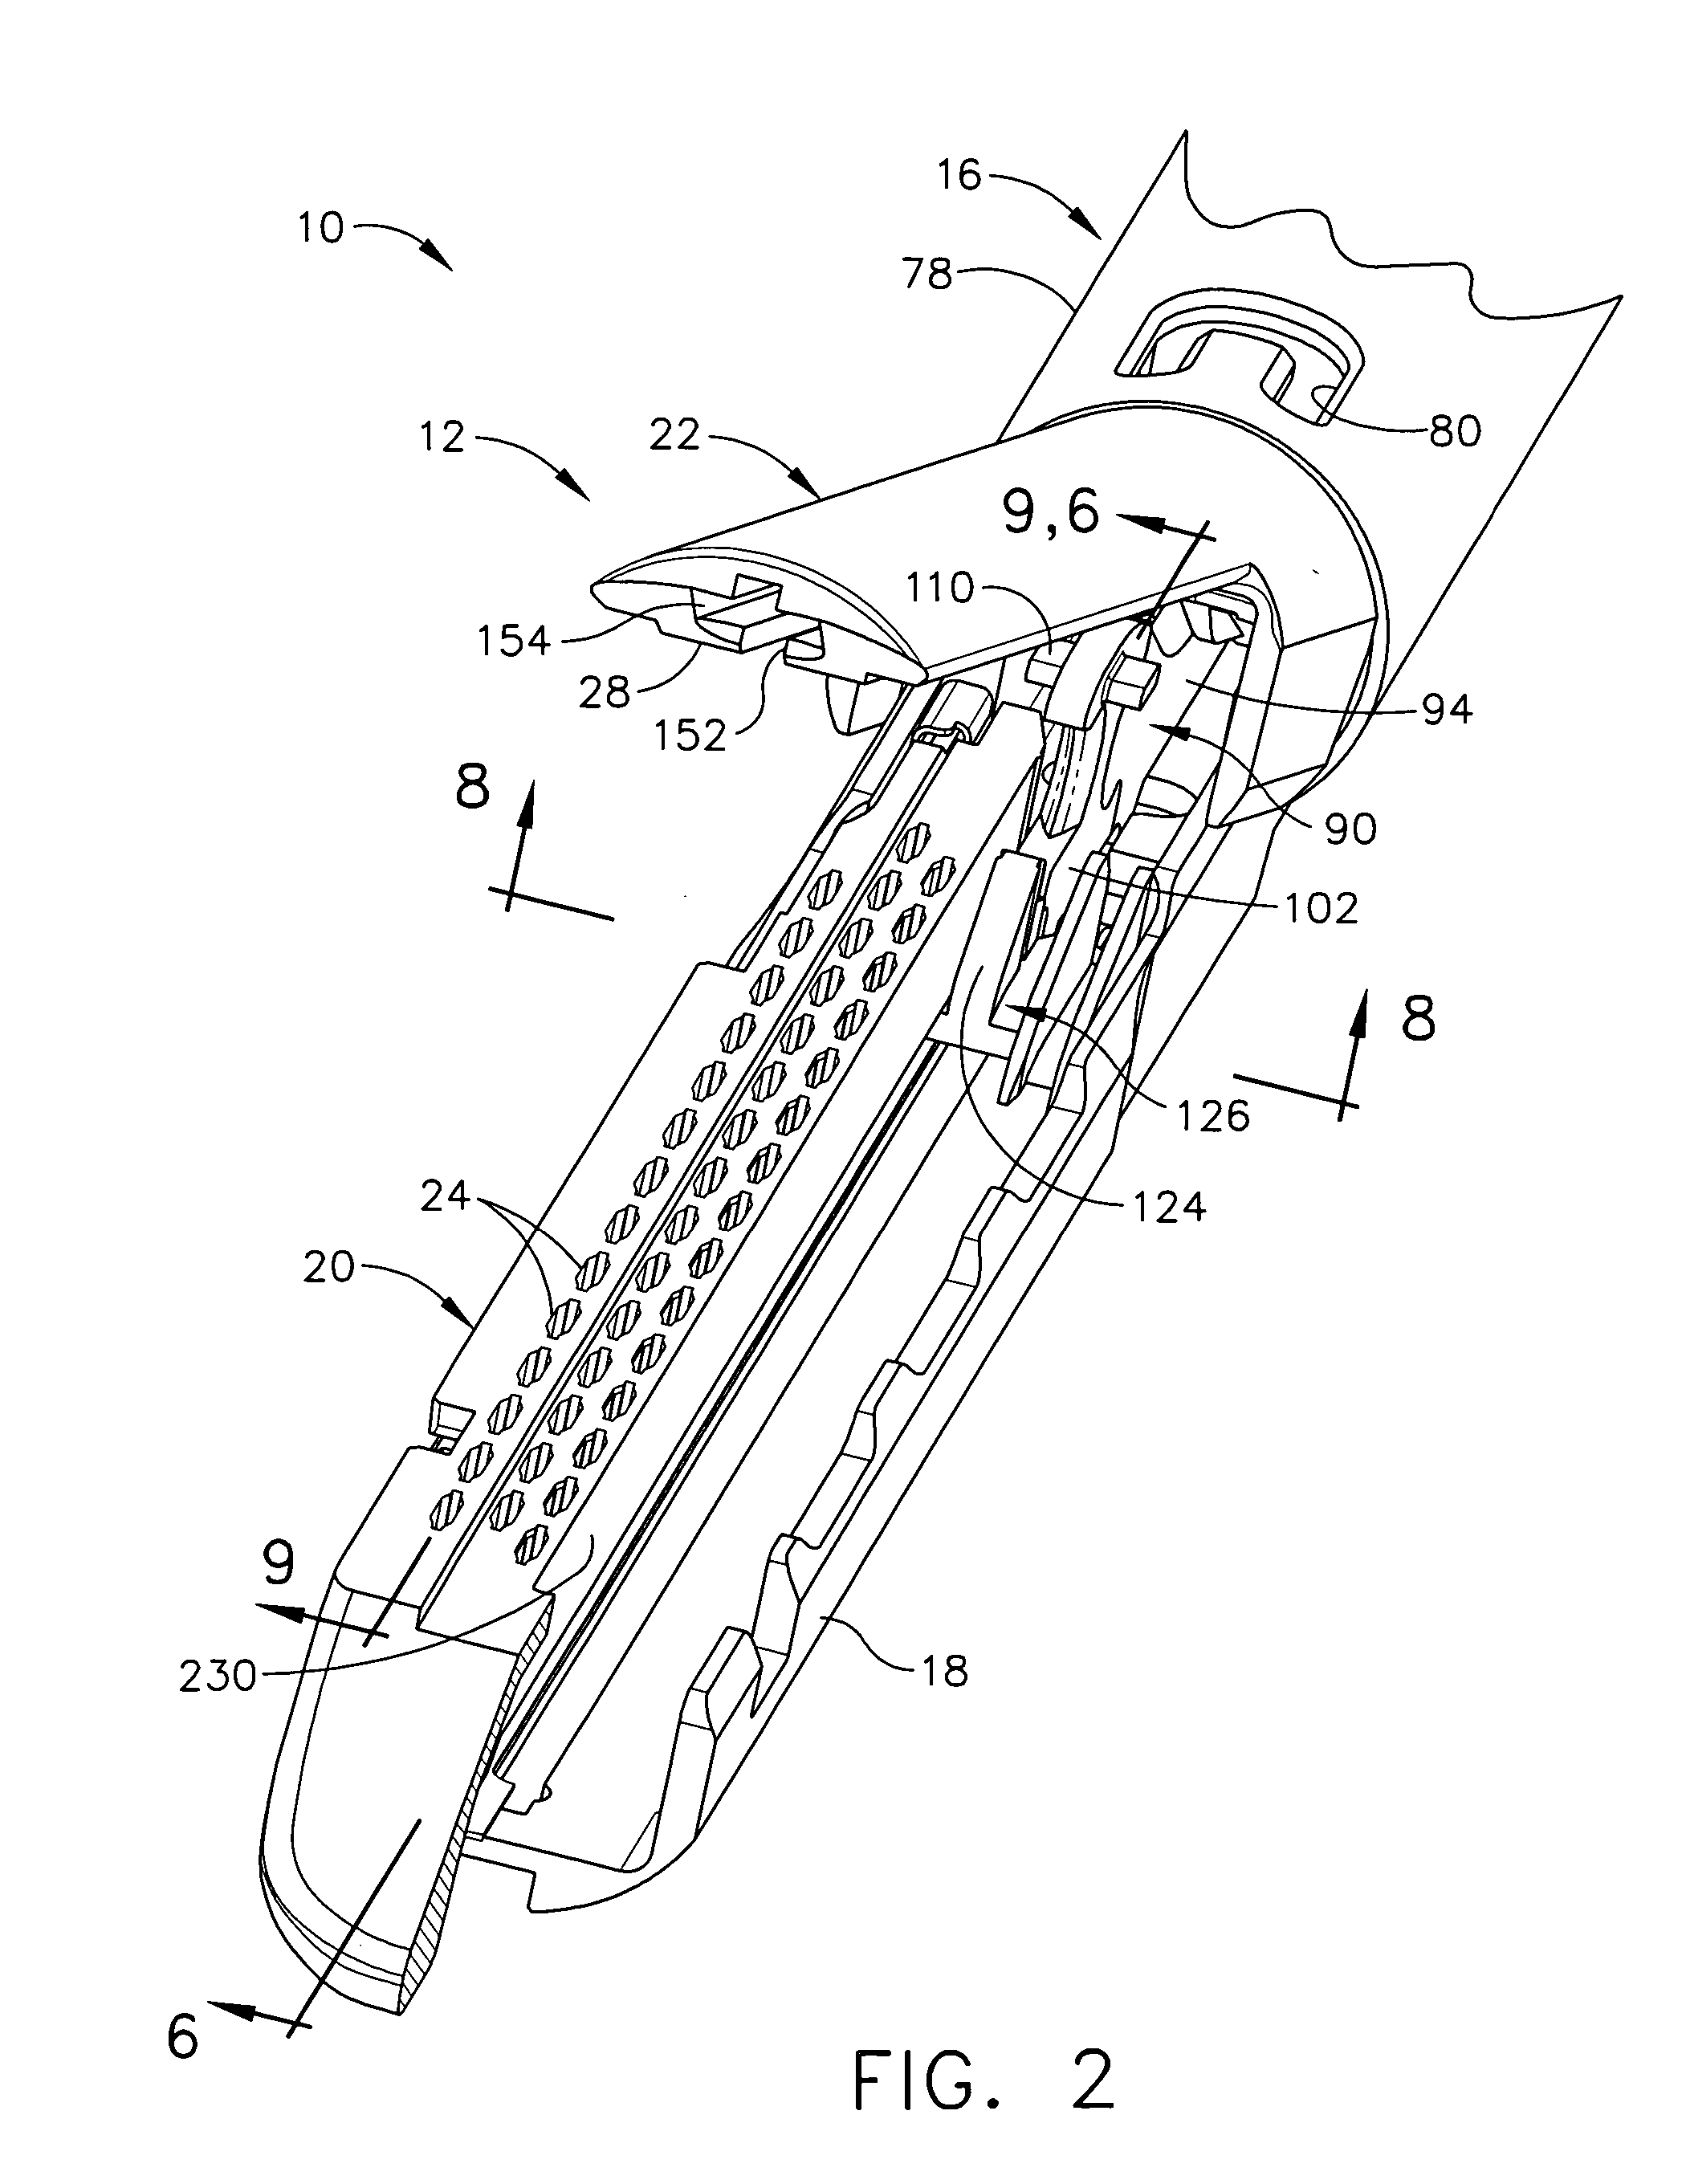 Articulating surgical stapling instrument incorporating a two-piece E-beam firing mechanism